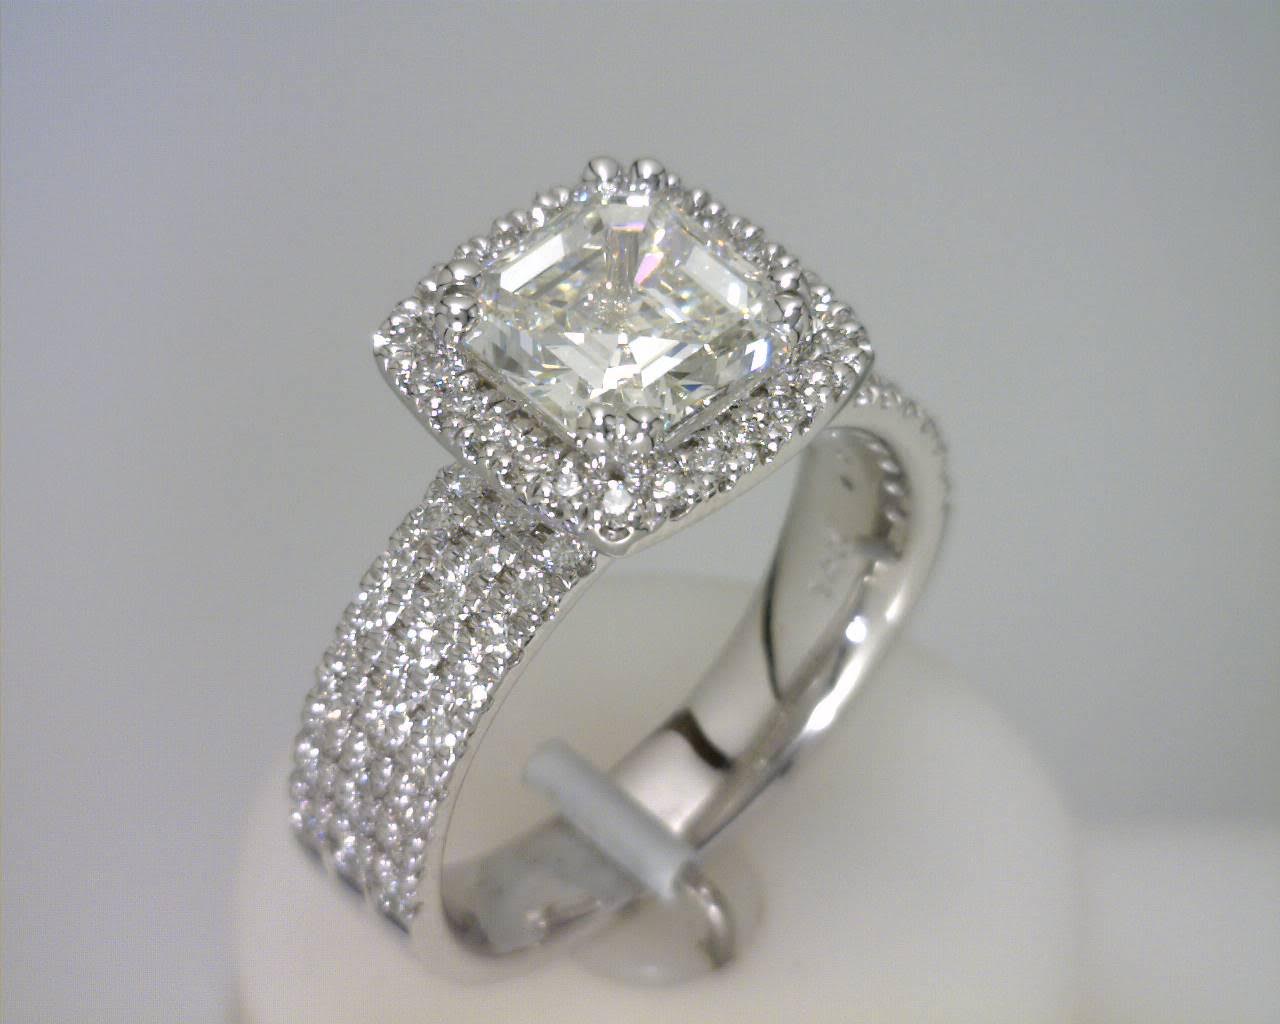 a square emerald cut diamond set in a bespoke halo ring